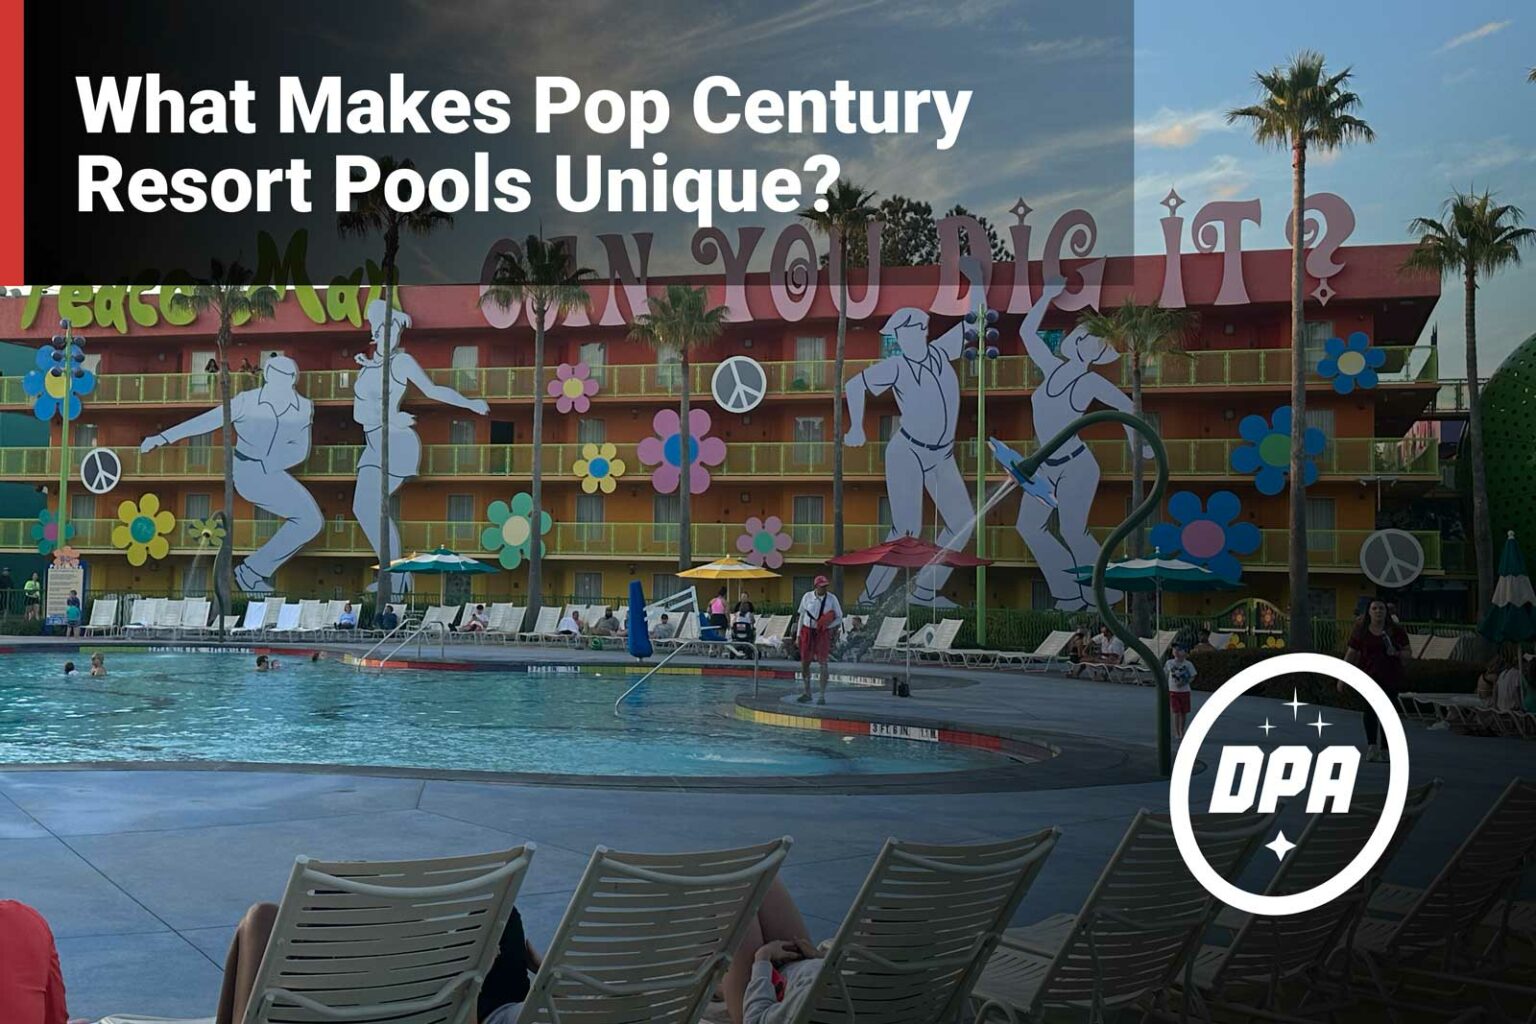 What Makes Disney's Pop Century Resort Pools Unique?